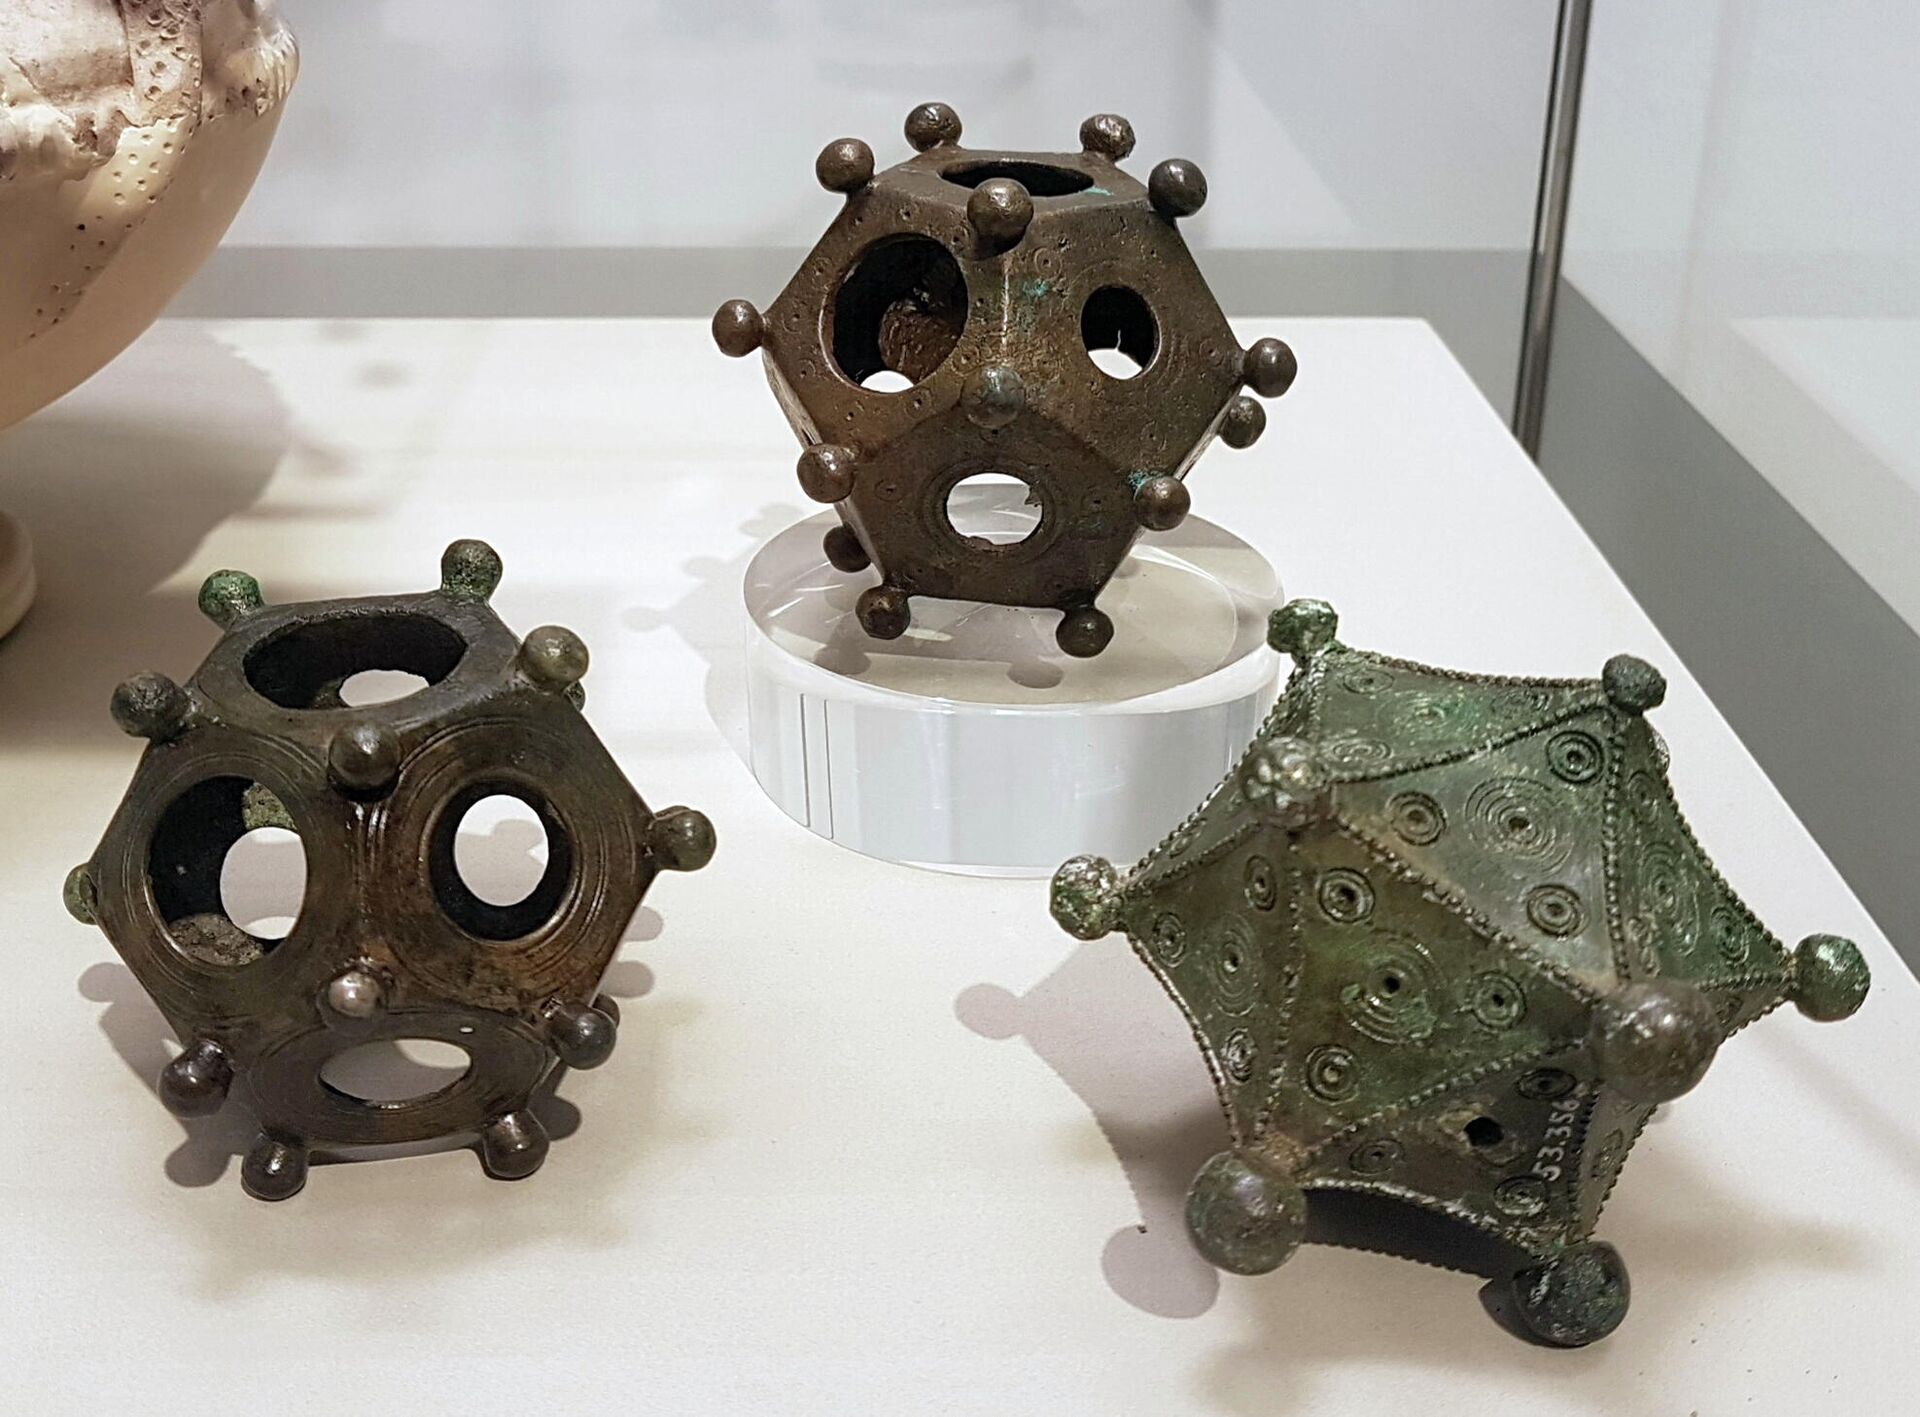 Dva dodekaedra i ikosaedar izloženi u muzeju u Nemačkoj - Sputnik Srbija, 1920, 27.12.2021